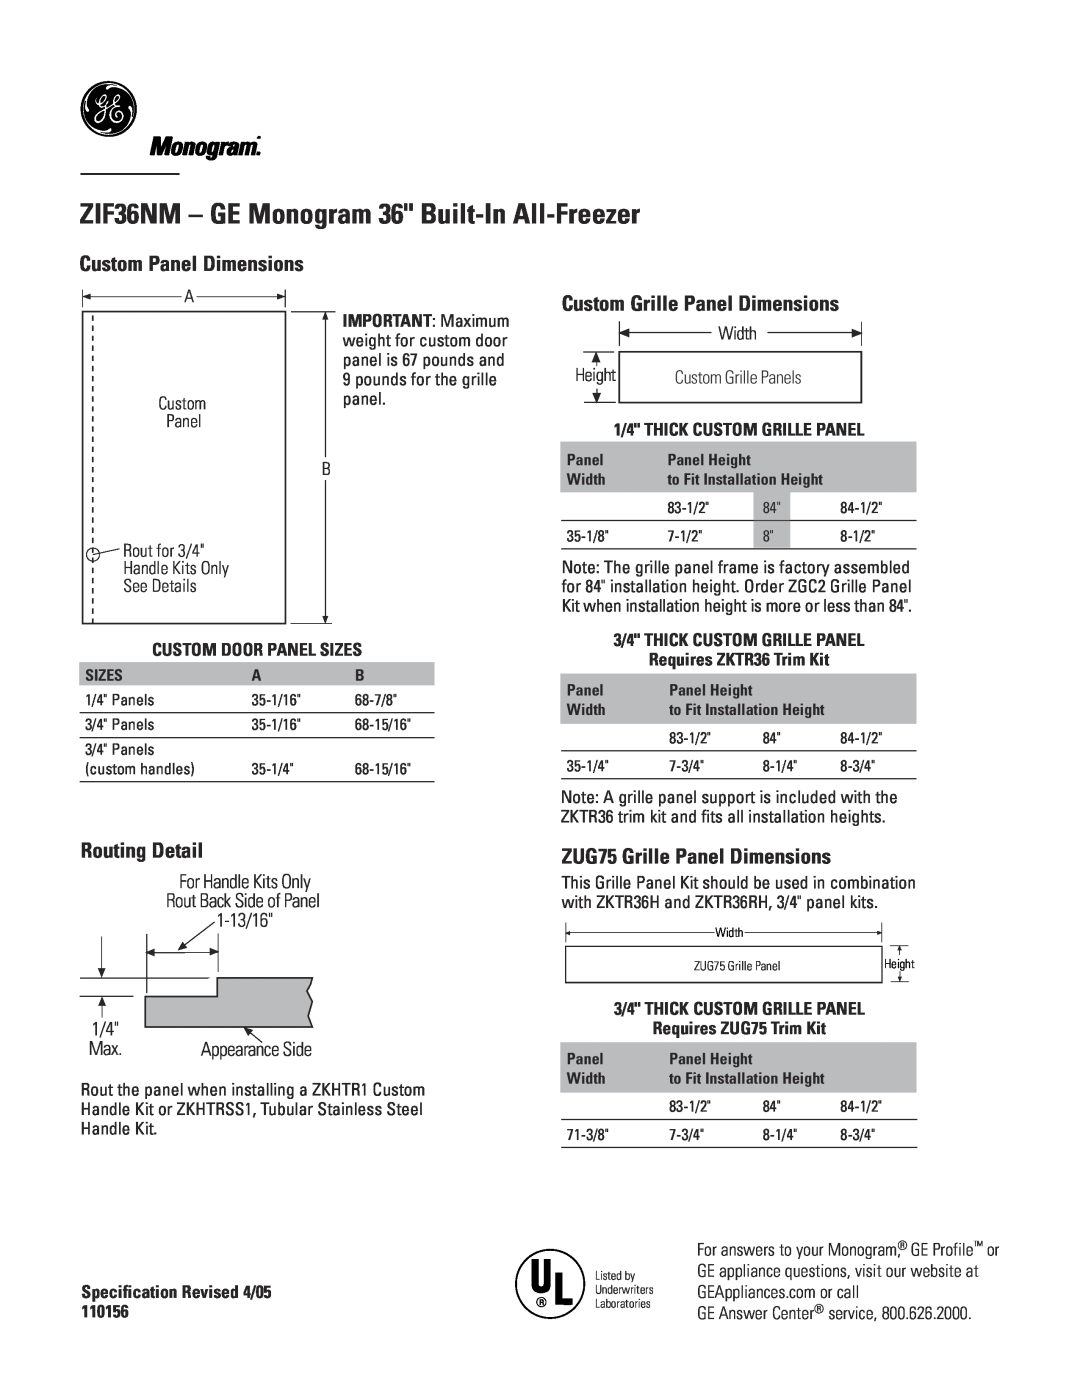 GE ZIF36NM - GE Monogram 36 Built-In All-Freezer, Monogram.“, Custom Grille Panel Dimensions, Routing Detail, Width 